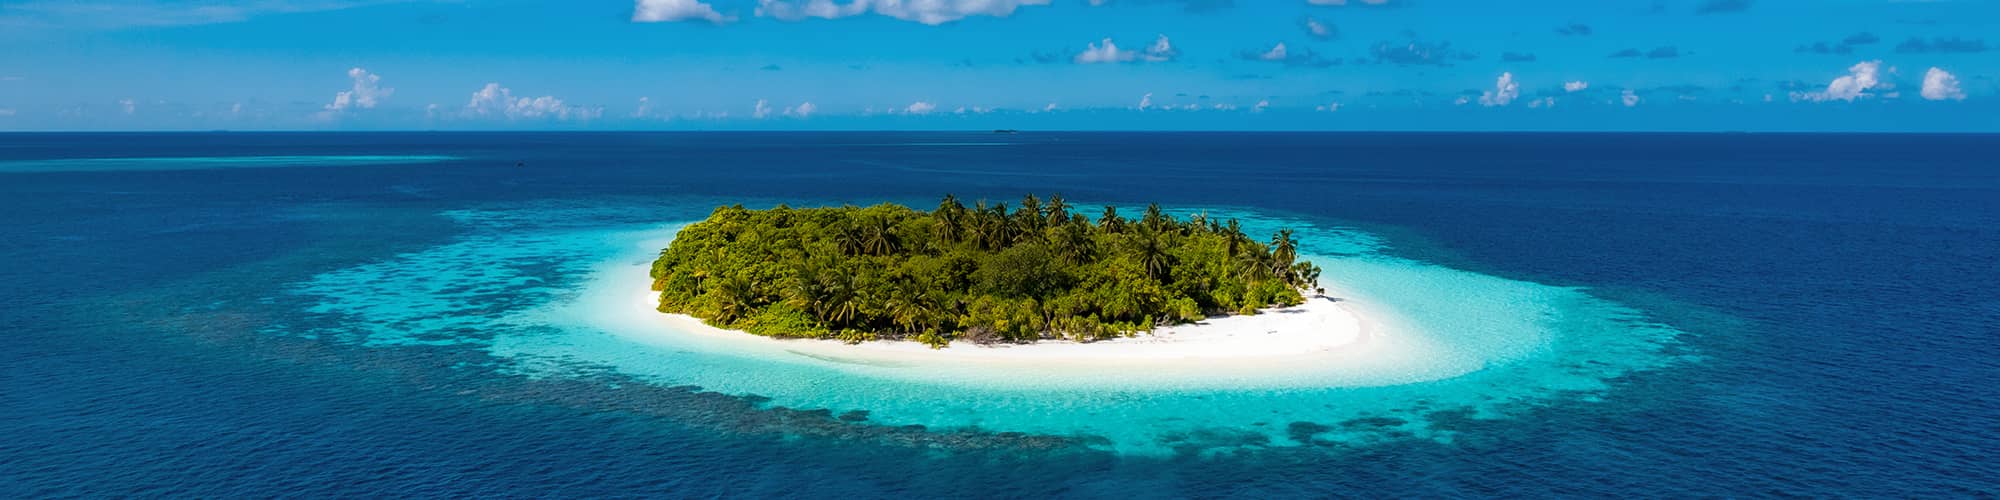 Voyage Bord de mer et îles Maldives © Freesurf / Adobe Stock